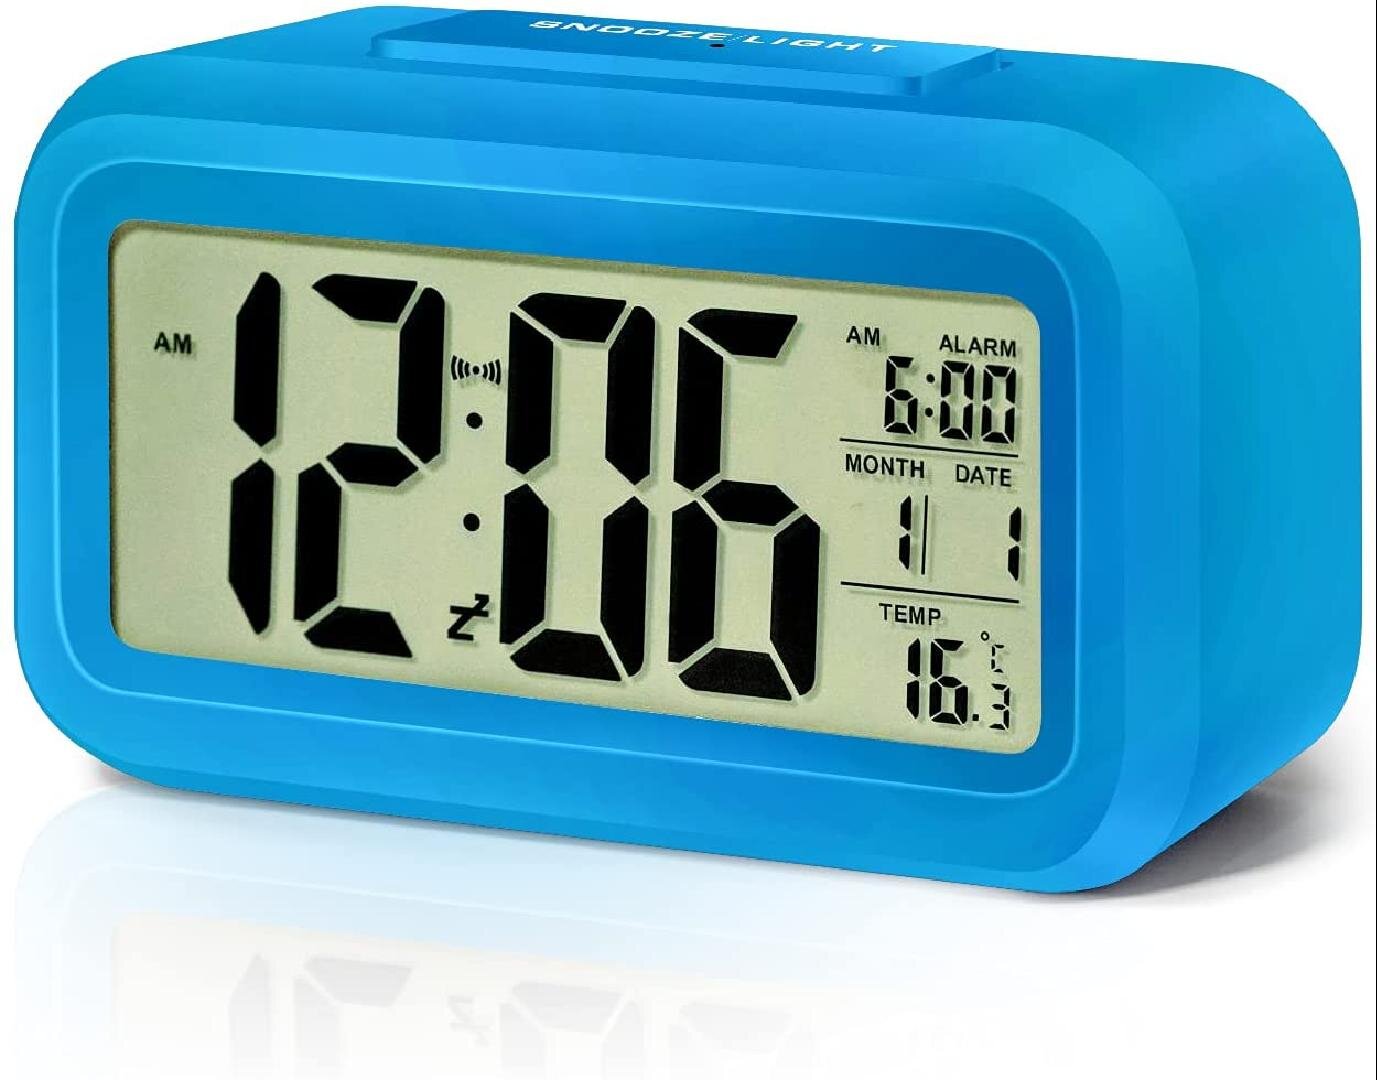 Jurassic World Park IV LED Night light Digital Alarm Clock A C050#9 